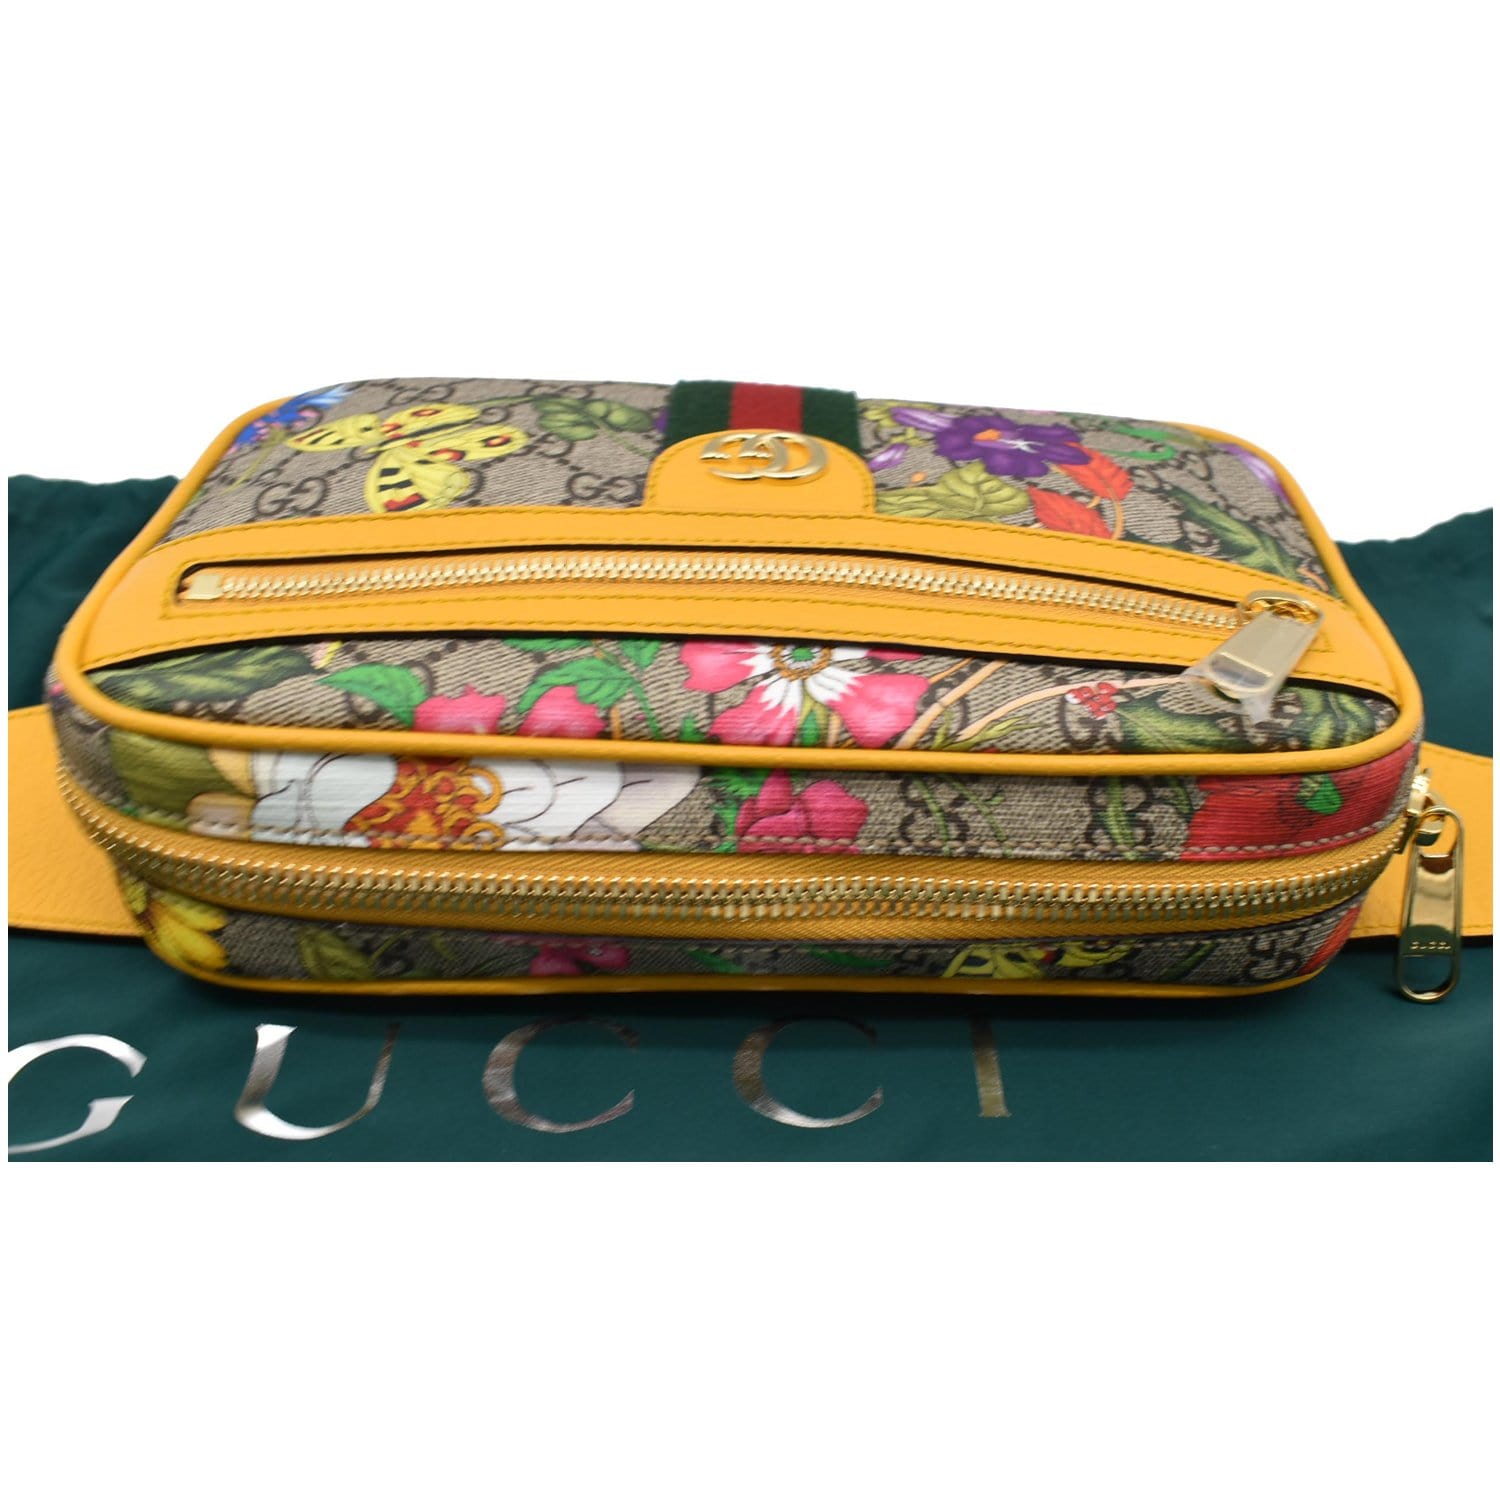 Gucci Limited Edition Beige Leather & Floral Print Canvas Flora Bag, Lot  #56364